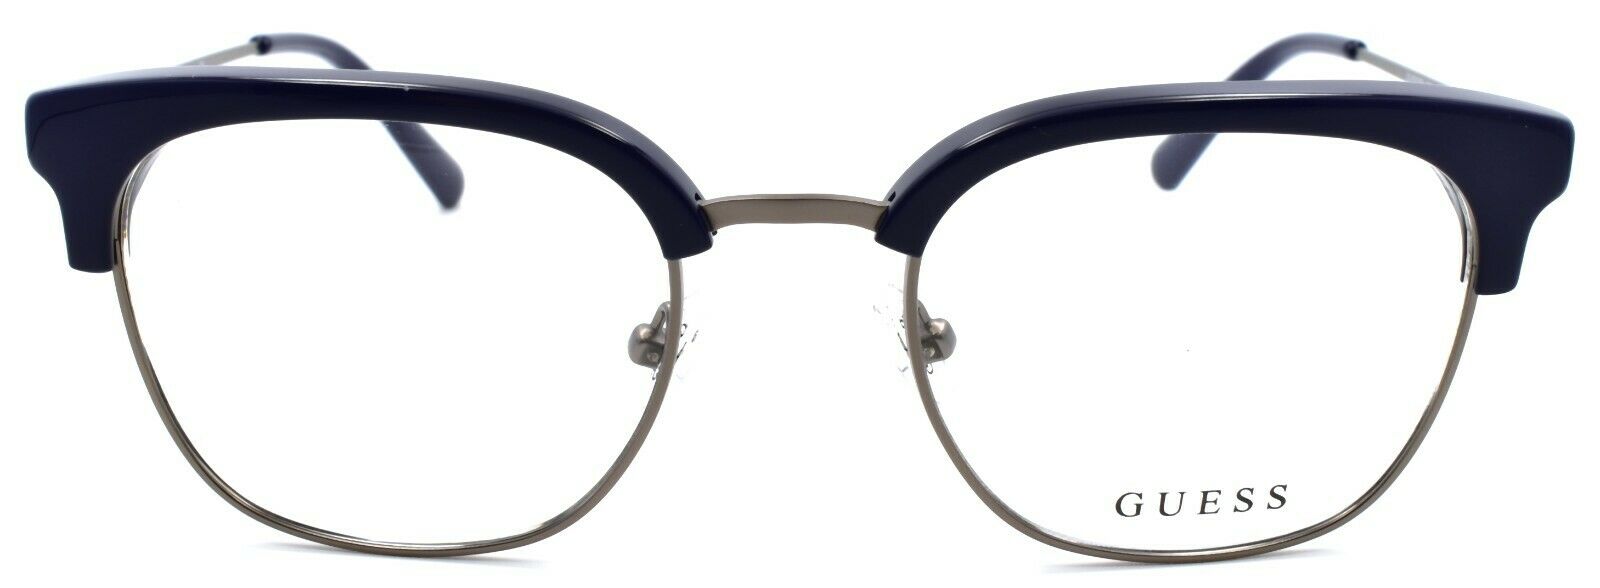 2-GUESS GU50006 090 Men's Eyeglasses Frames 50-20-145 Blue / Ruthenium-889214157690-IKSpecs